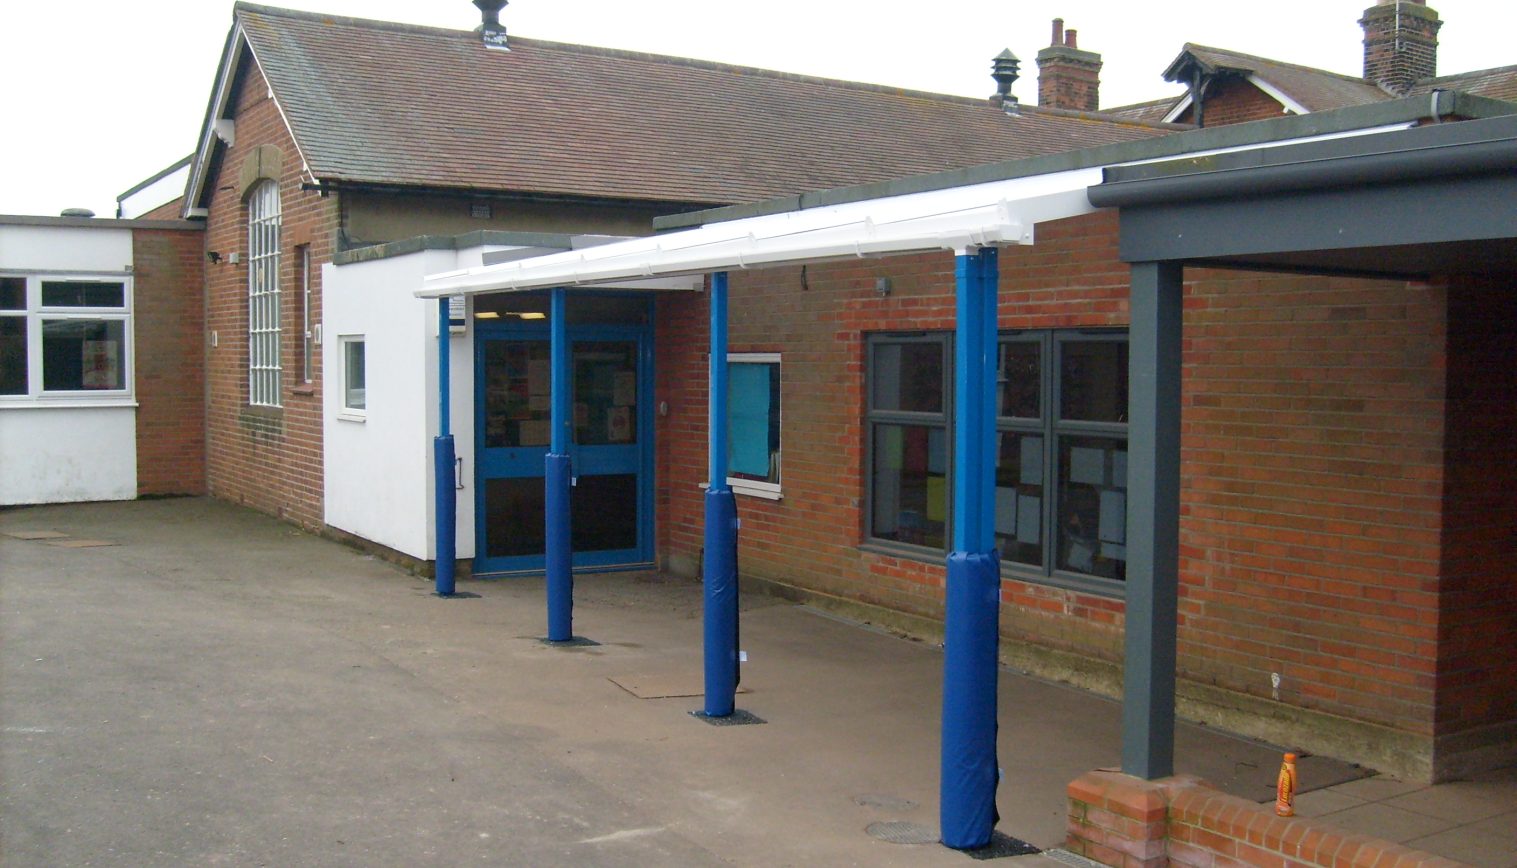 Canewdon Endowed Primary School and Nursery